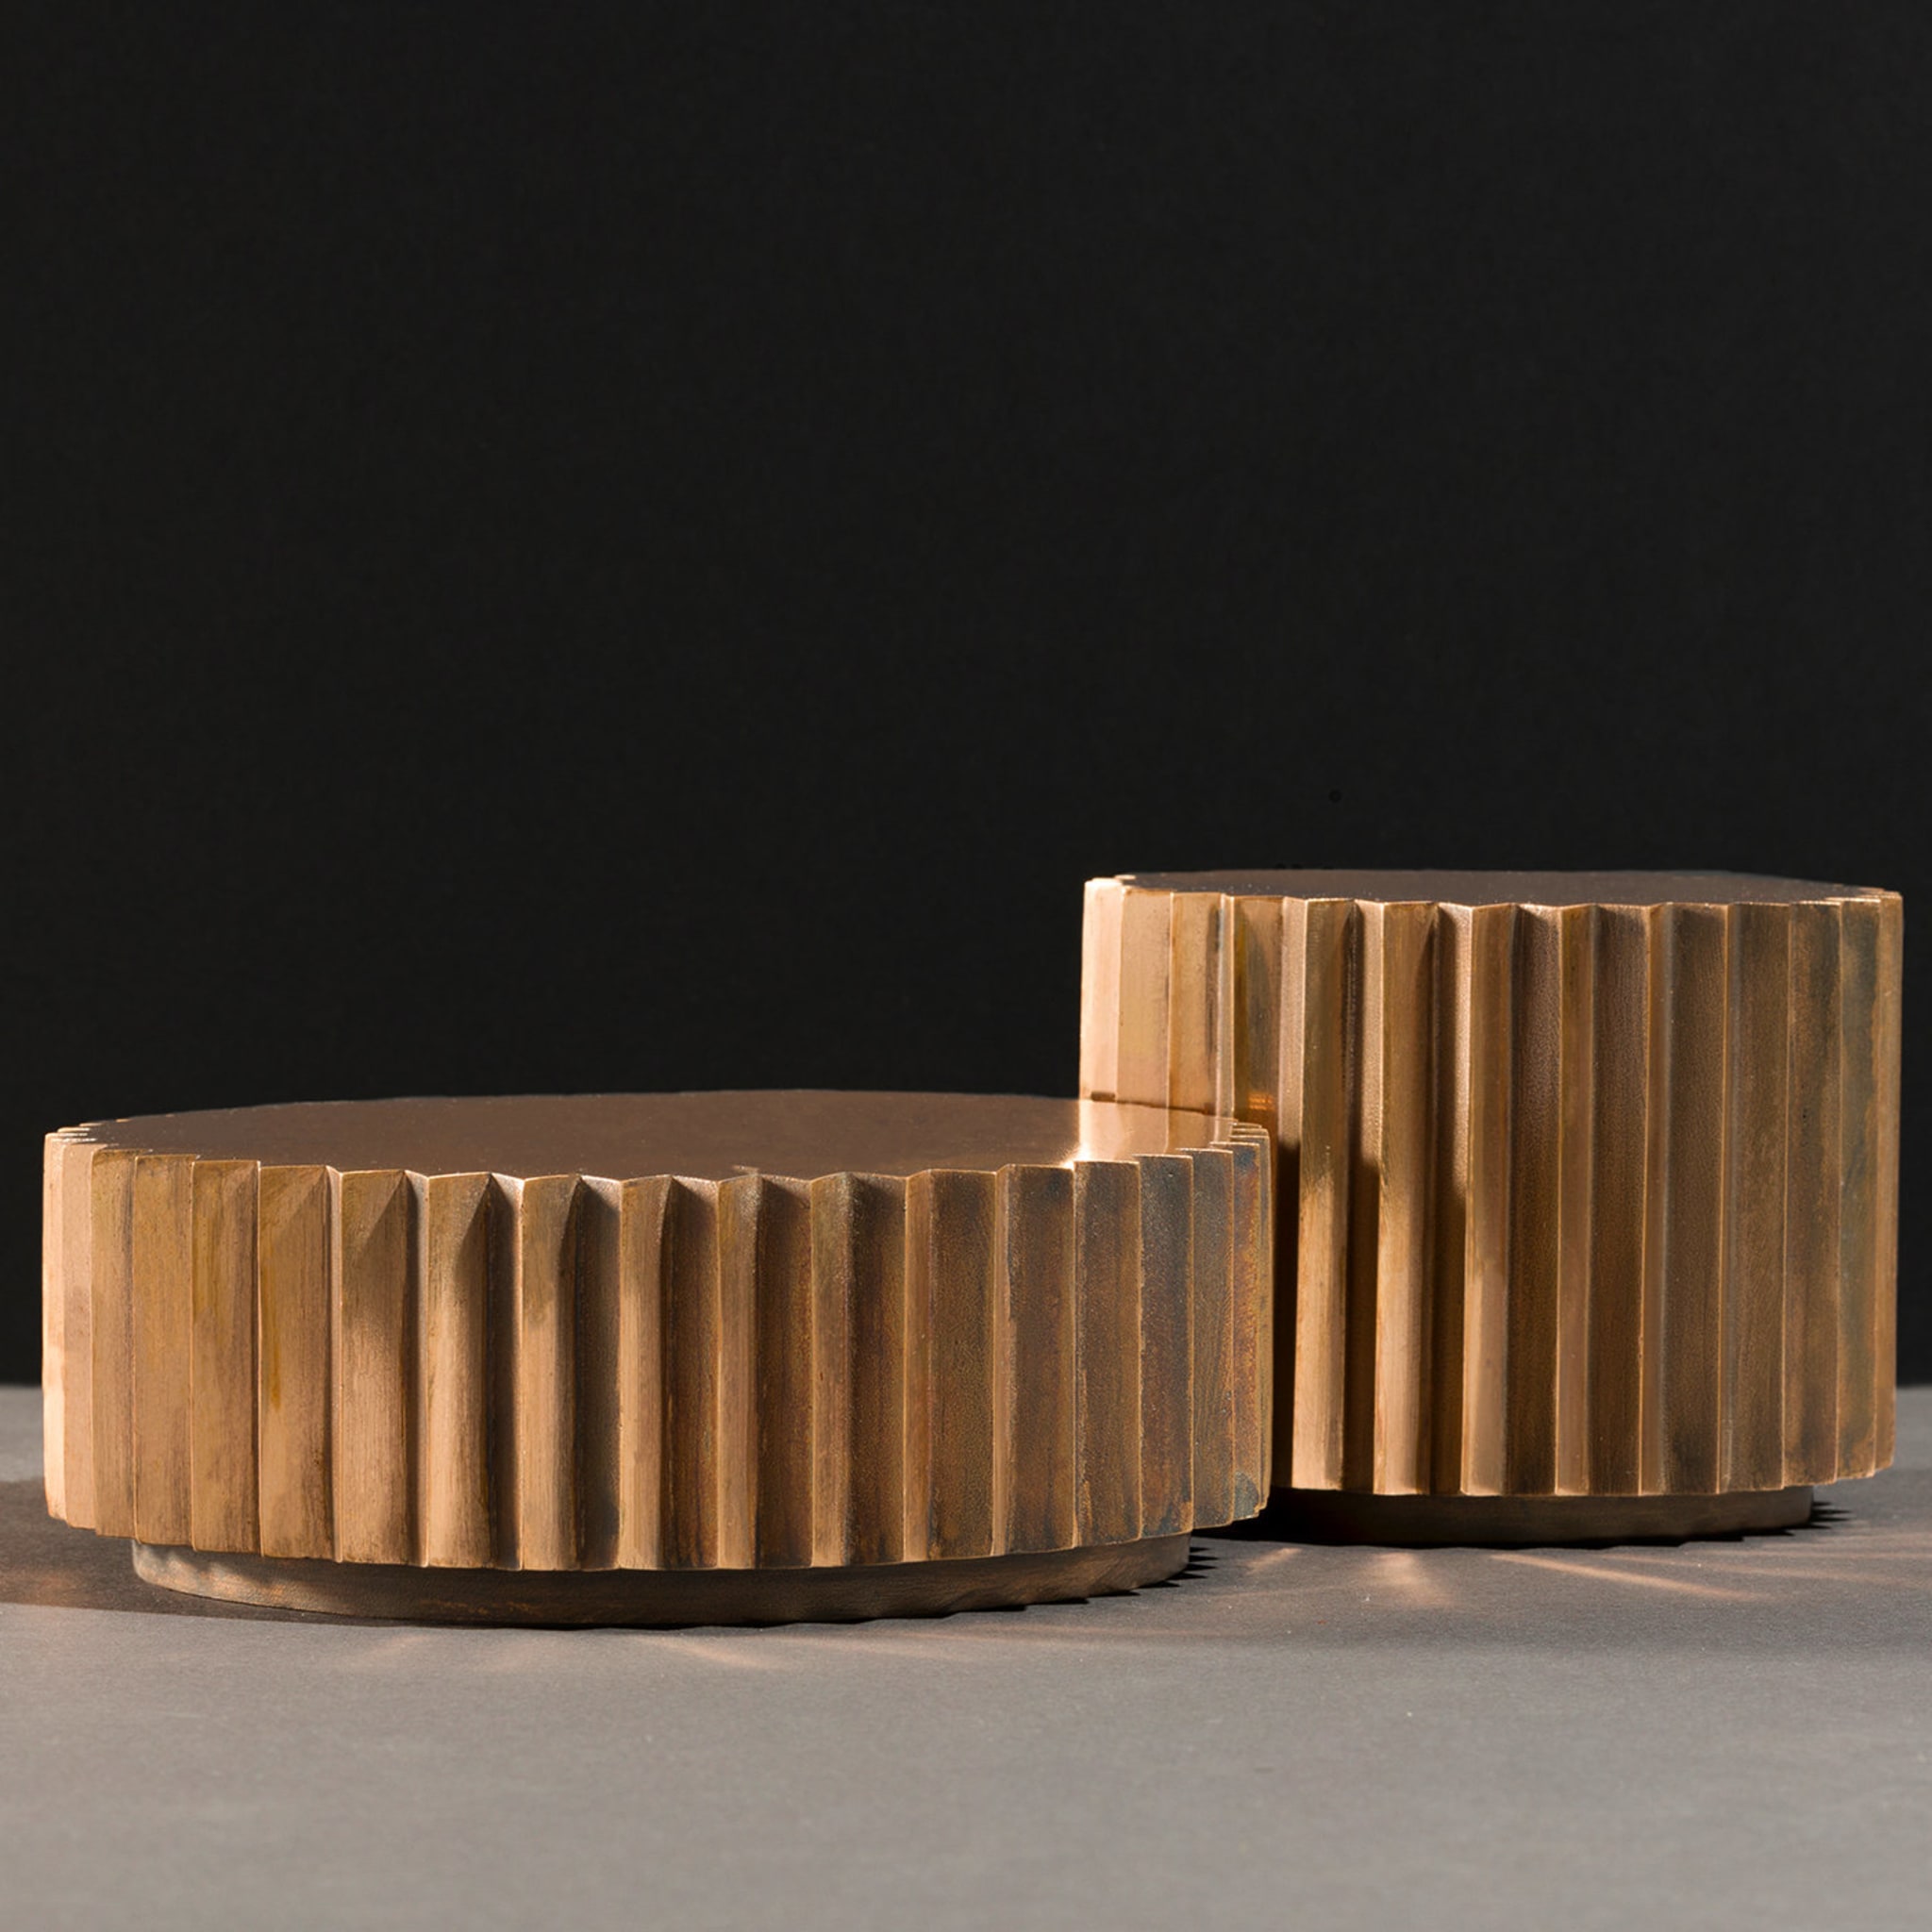 Doris Cast Oxidized Bronze Multifaceted Coffee Table Set - Alternative view 1